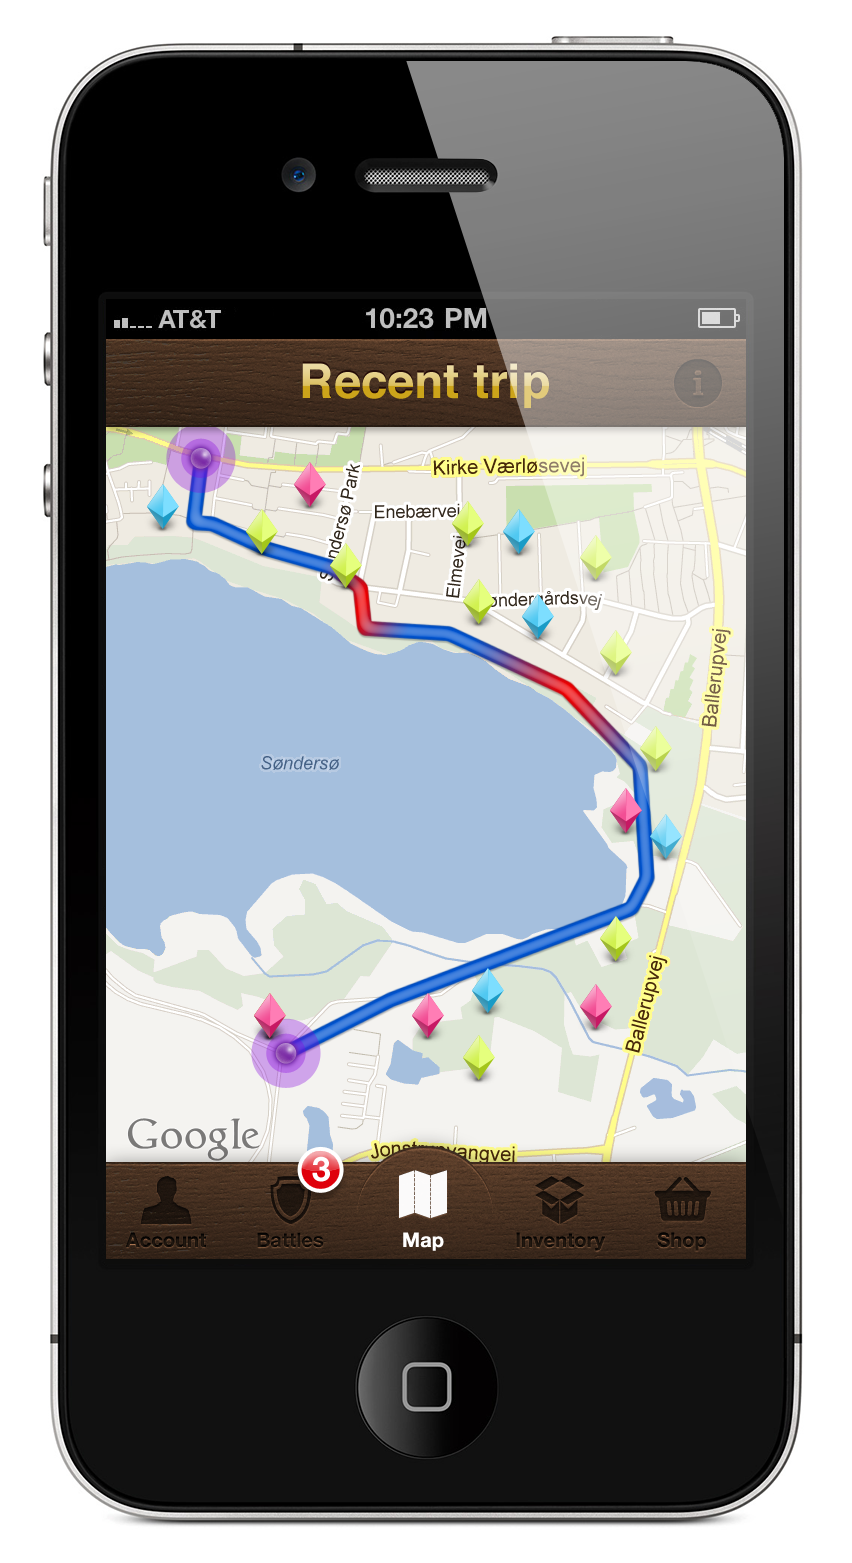 iphone UI game app user interface design